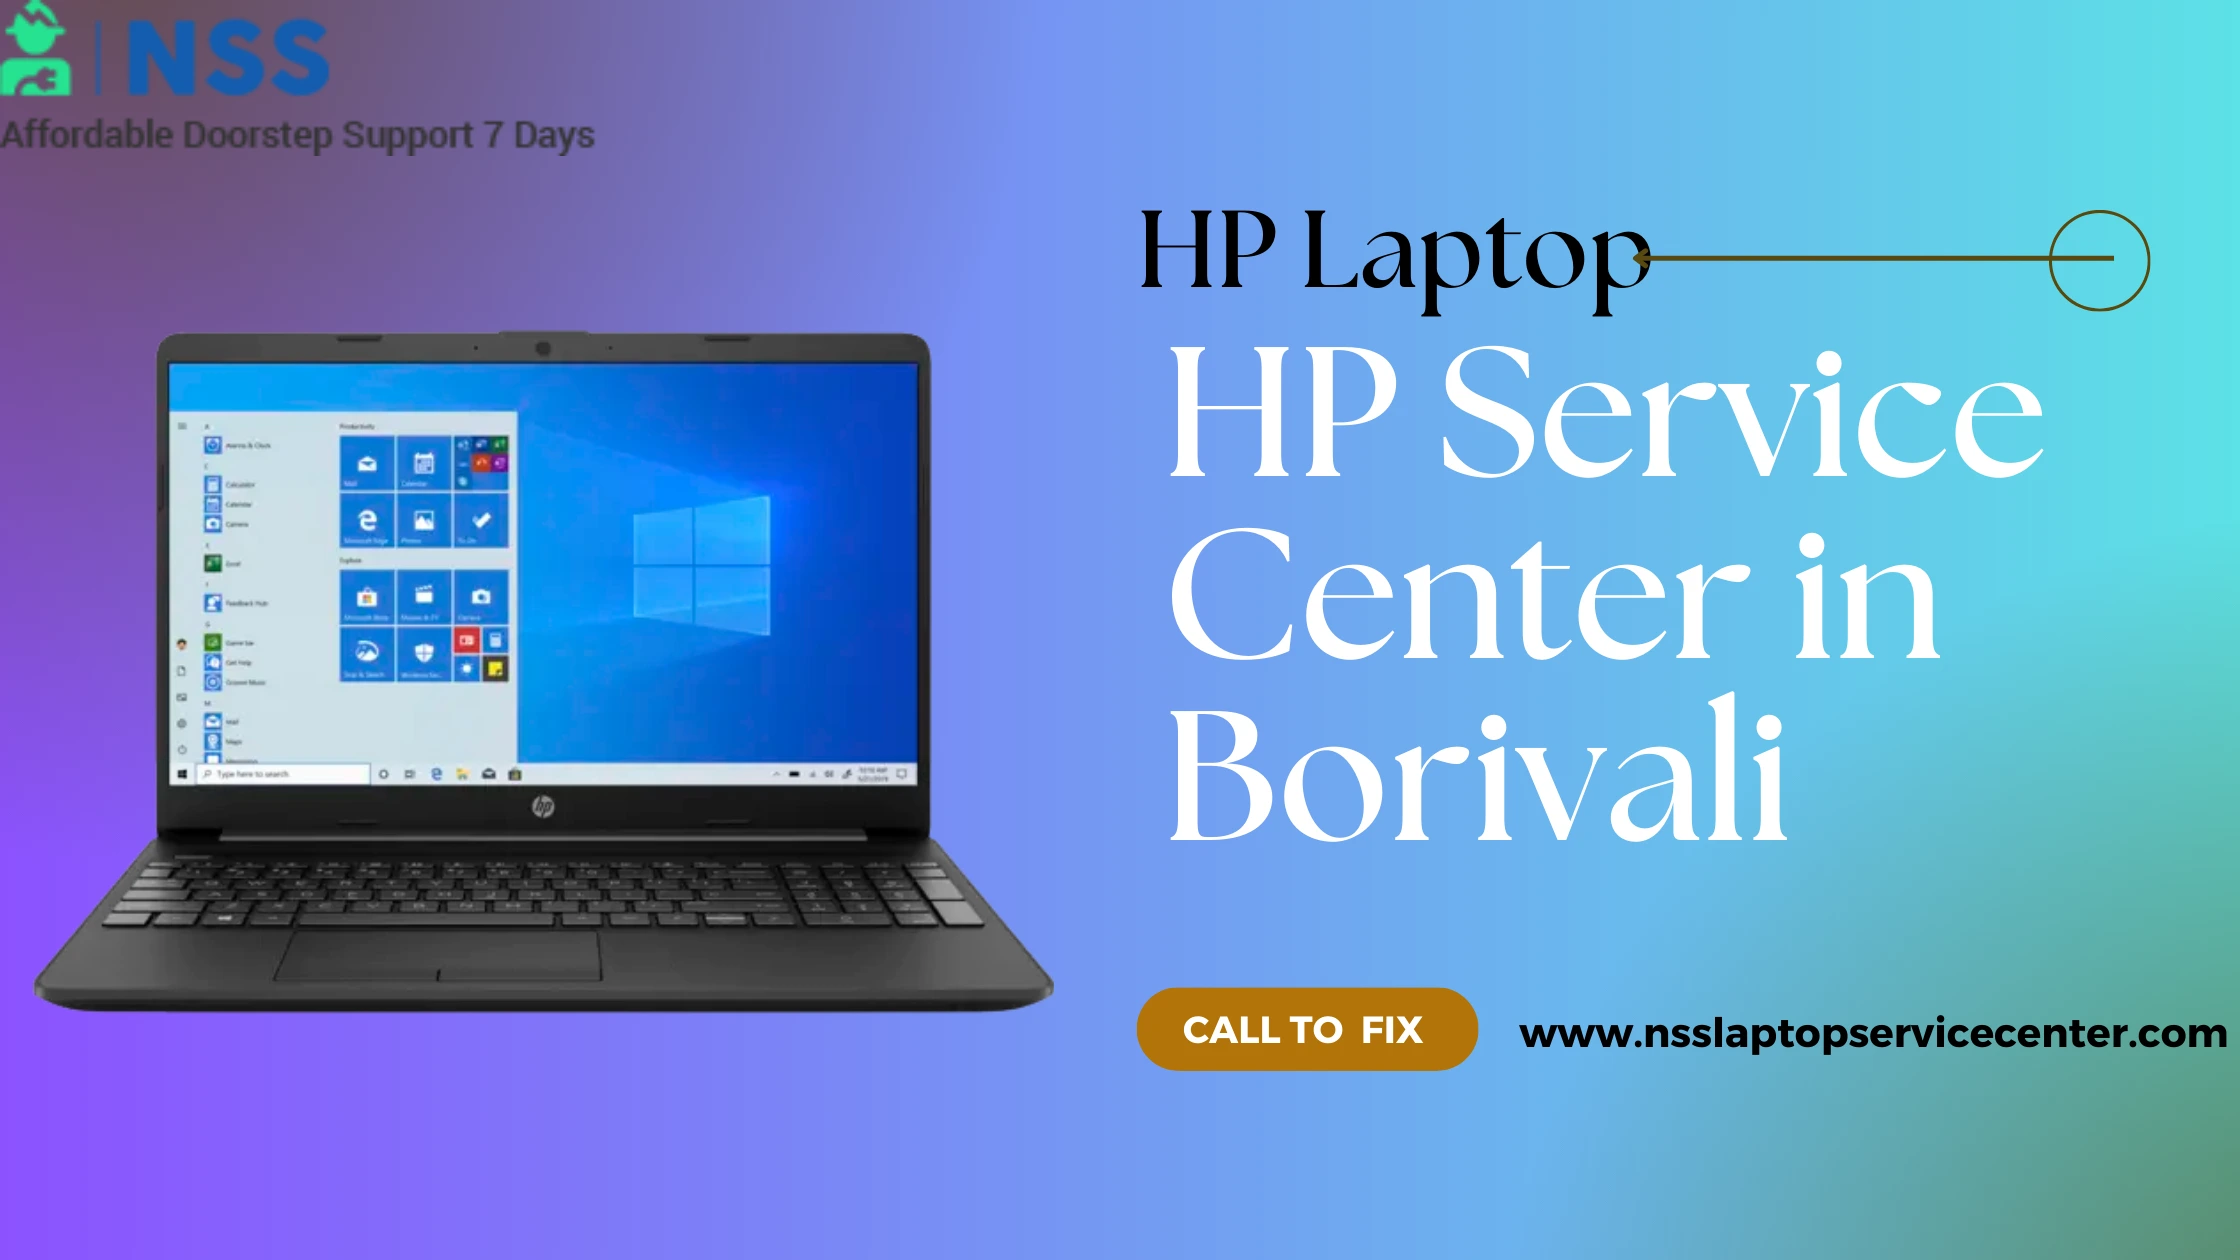 HP Service Center in Borivali Near Mumbai